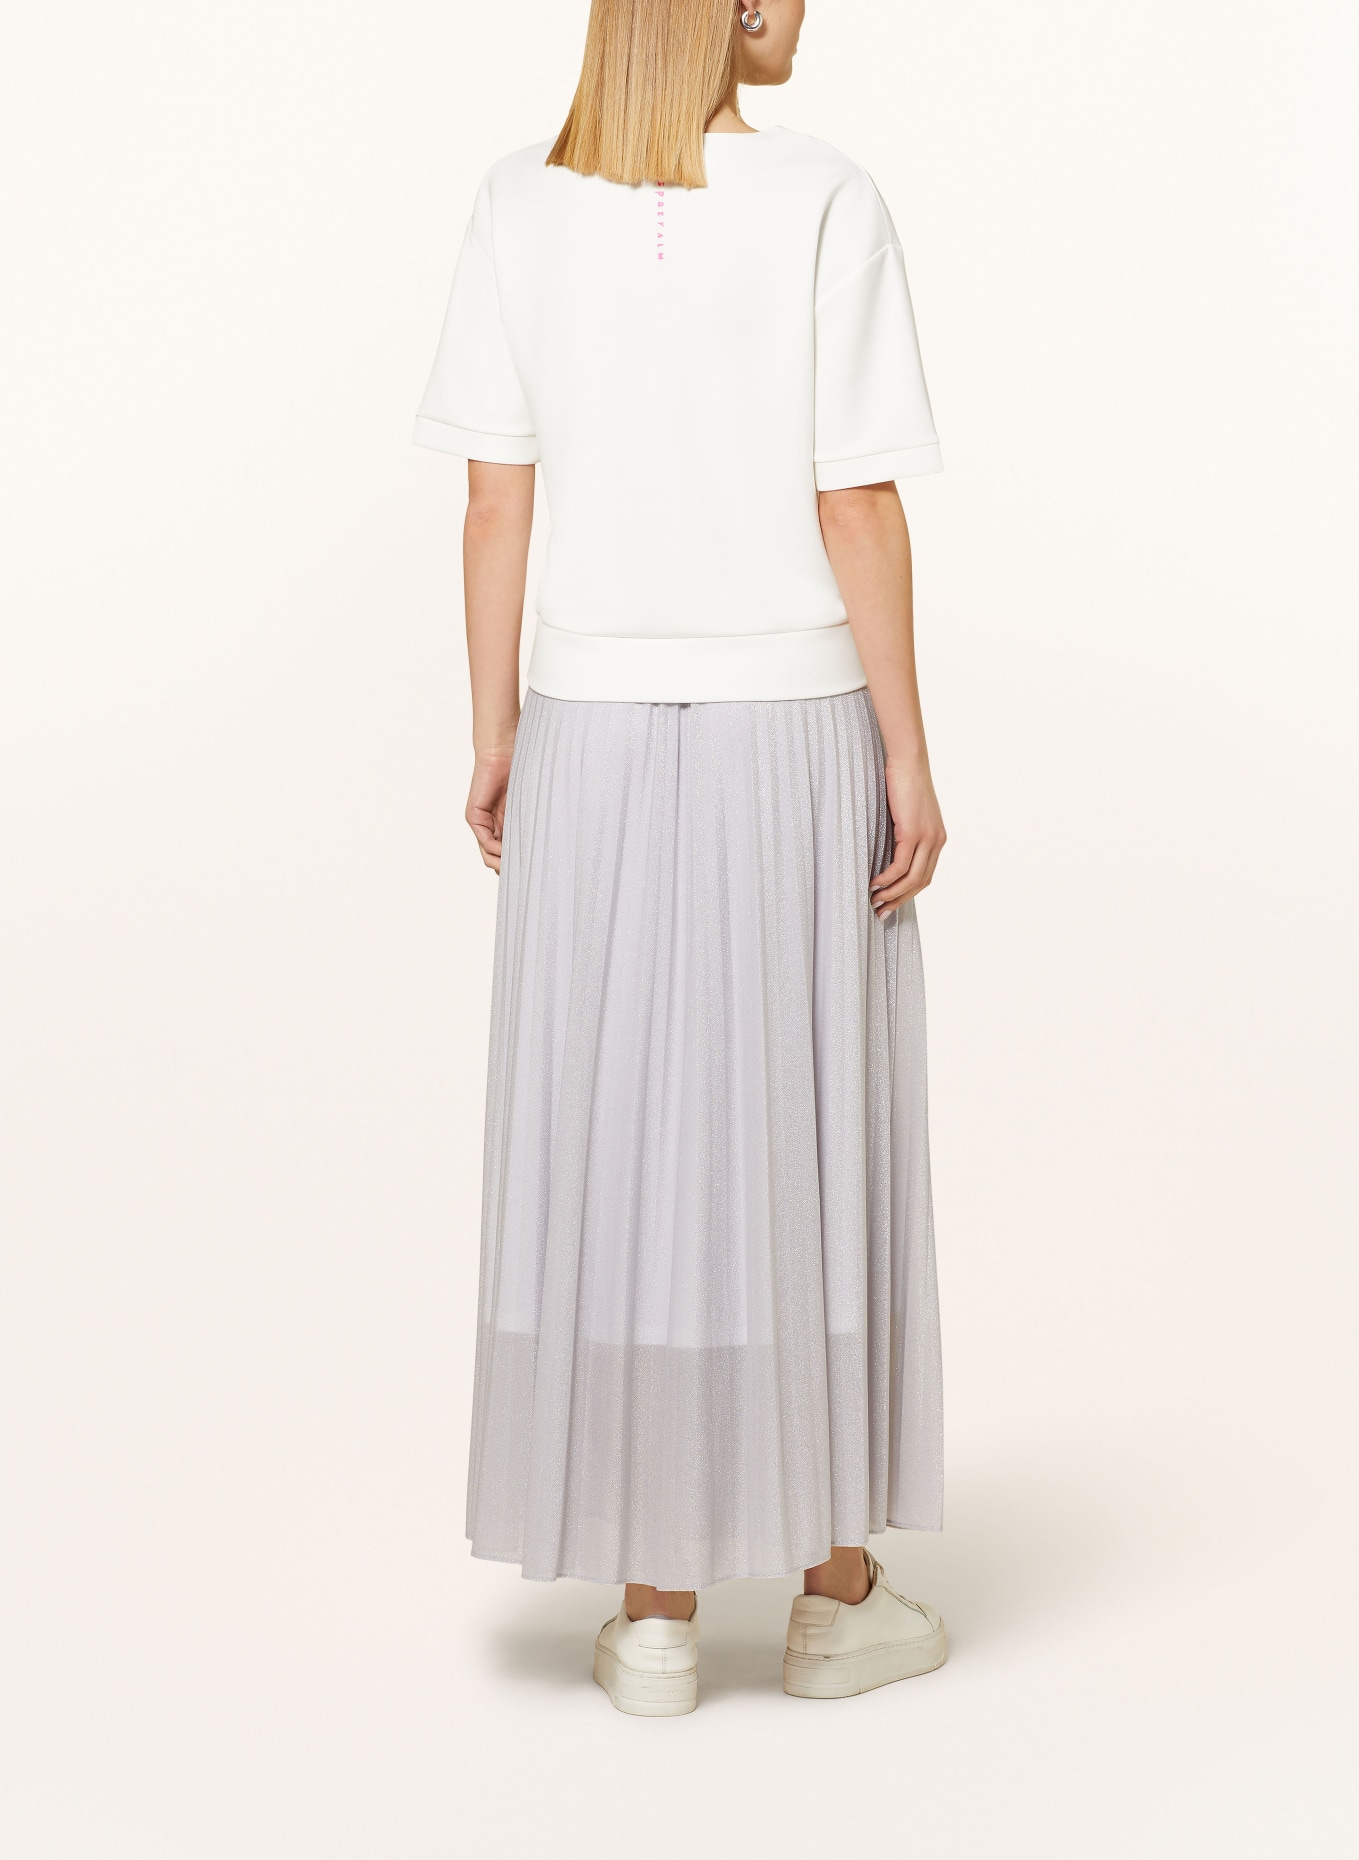 ULLI EHRLICH SPORTALM Pleated skirt with glitter thread, Color: LIGHT GRAY (Image 3)